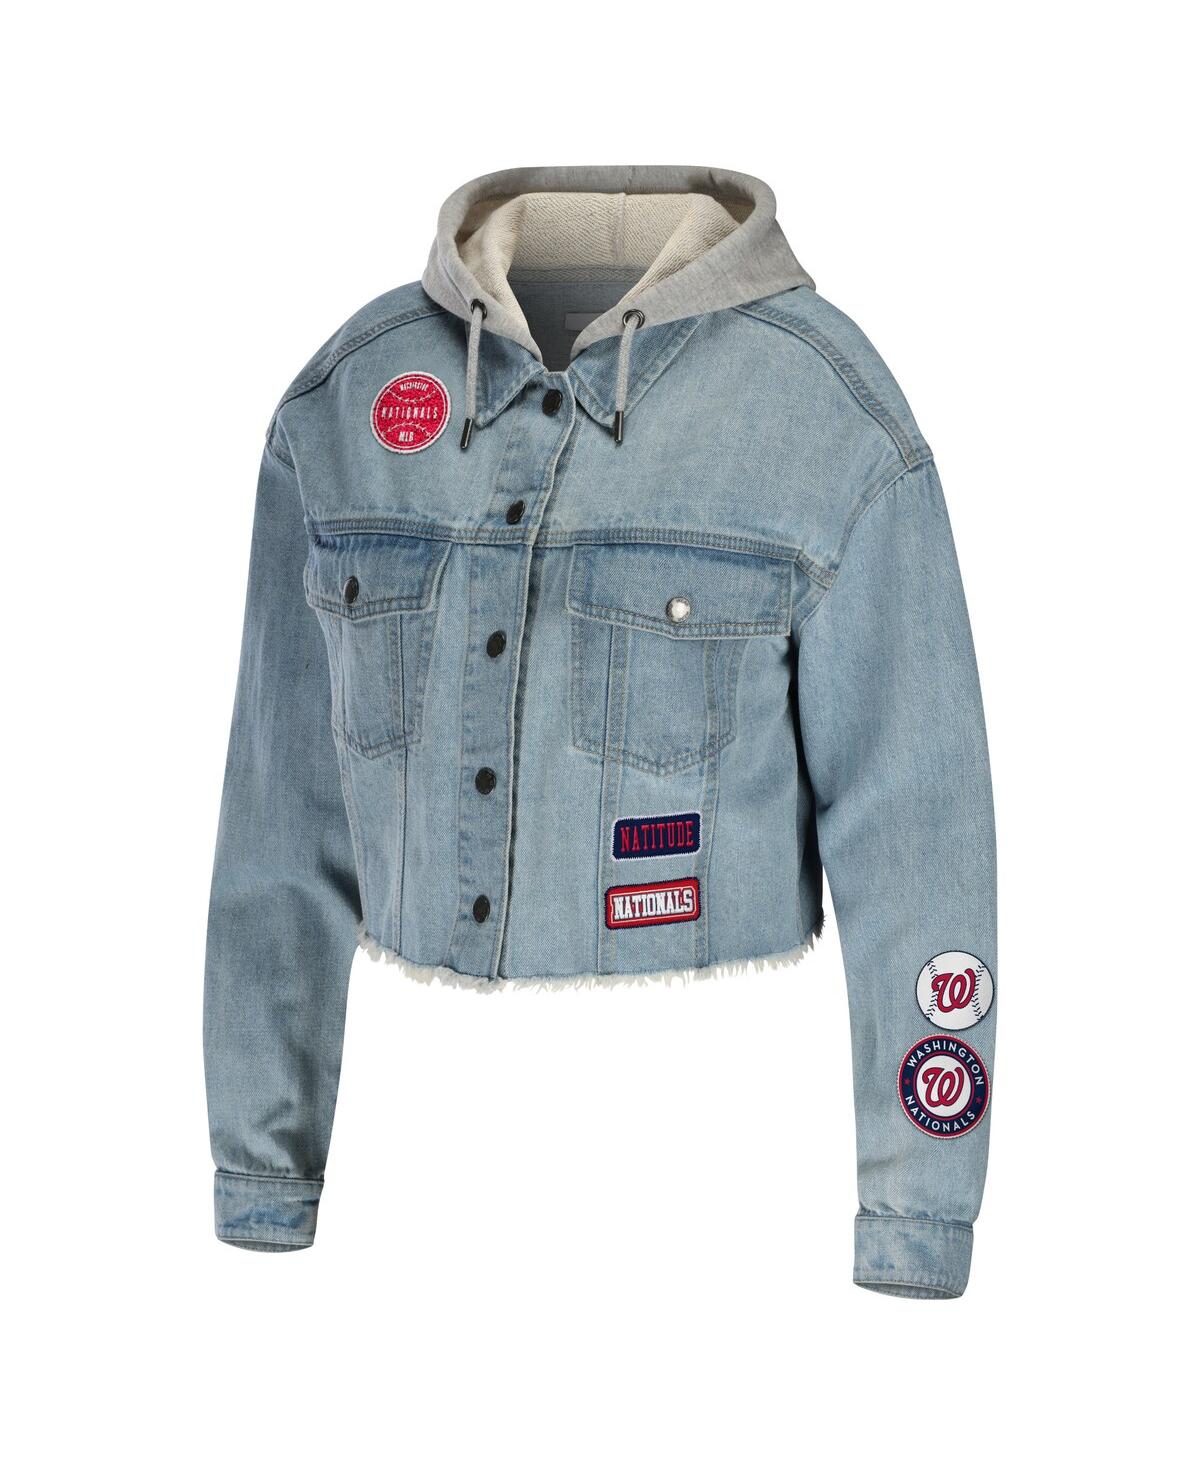 Shop Wear By Erin Andrews Women's  Washington Nationals Hooded Full-button Denim Jacket